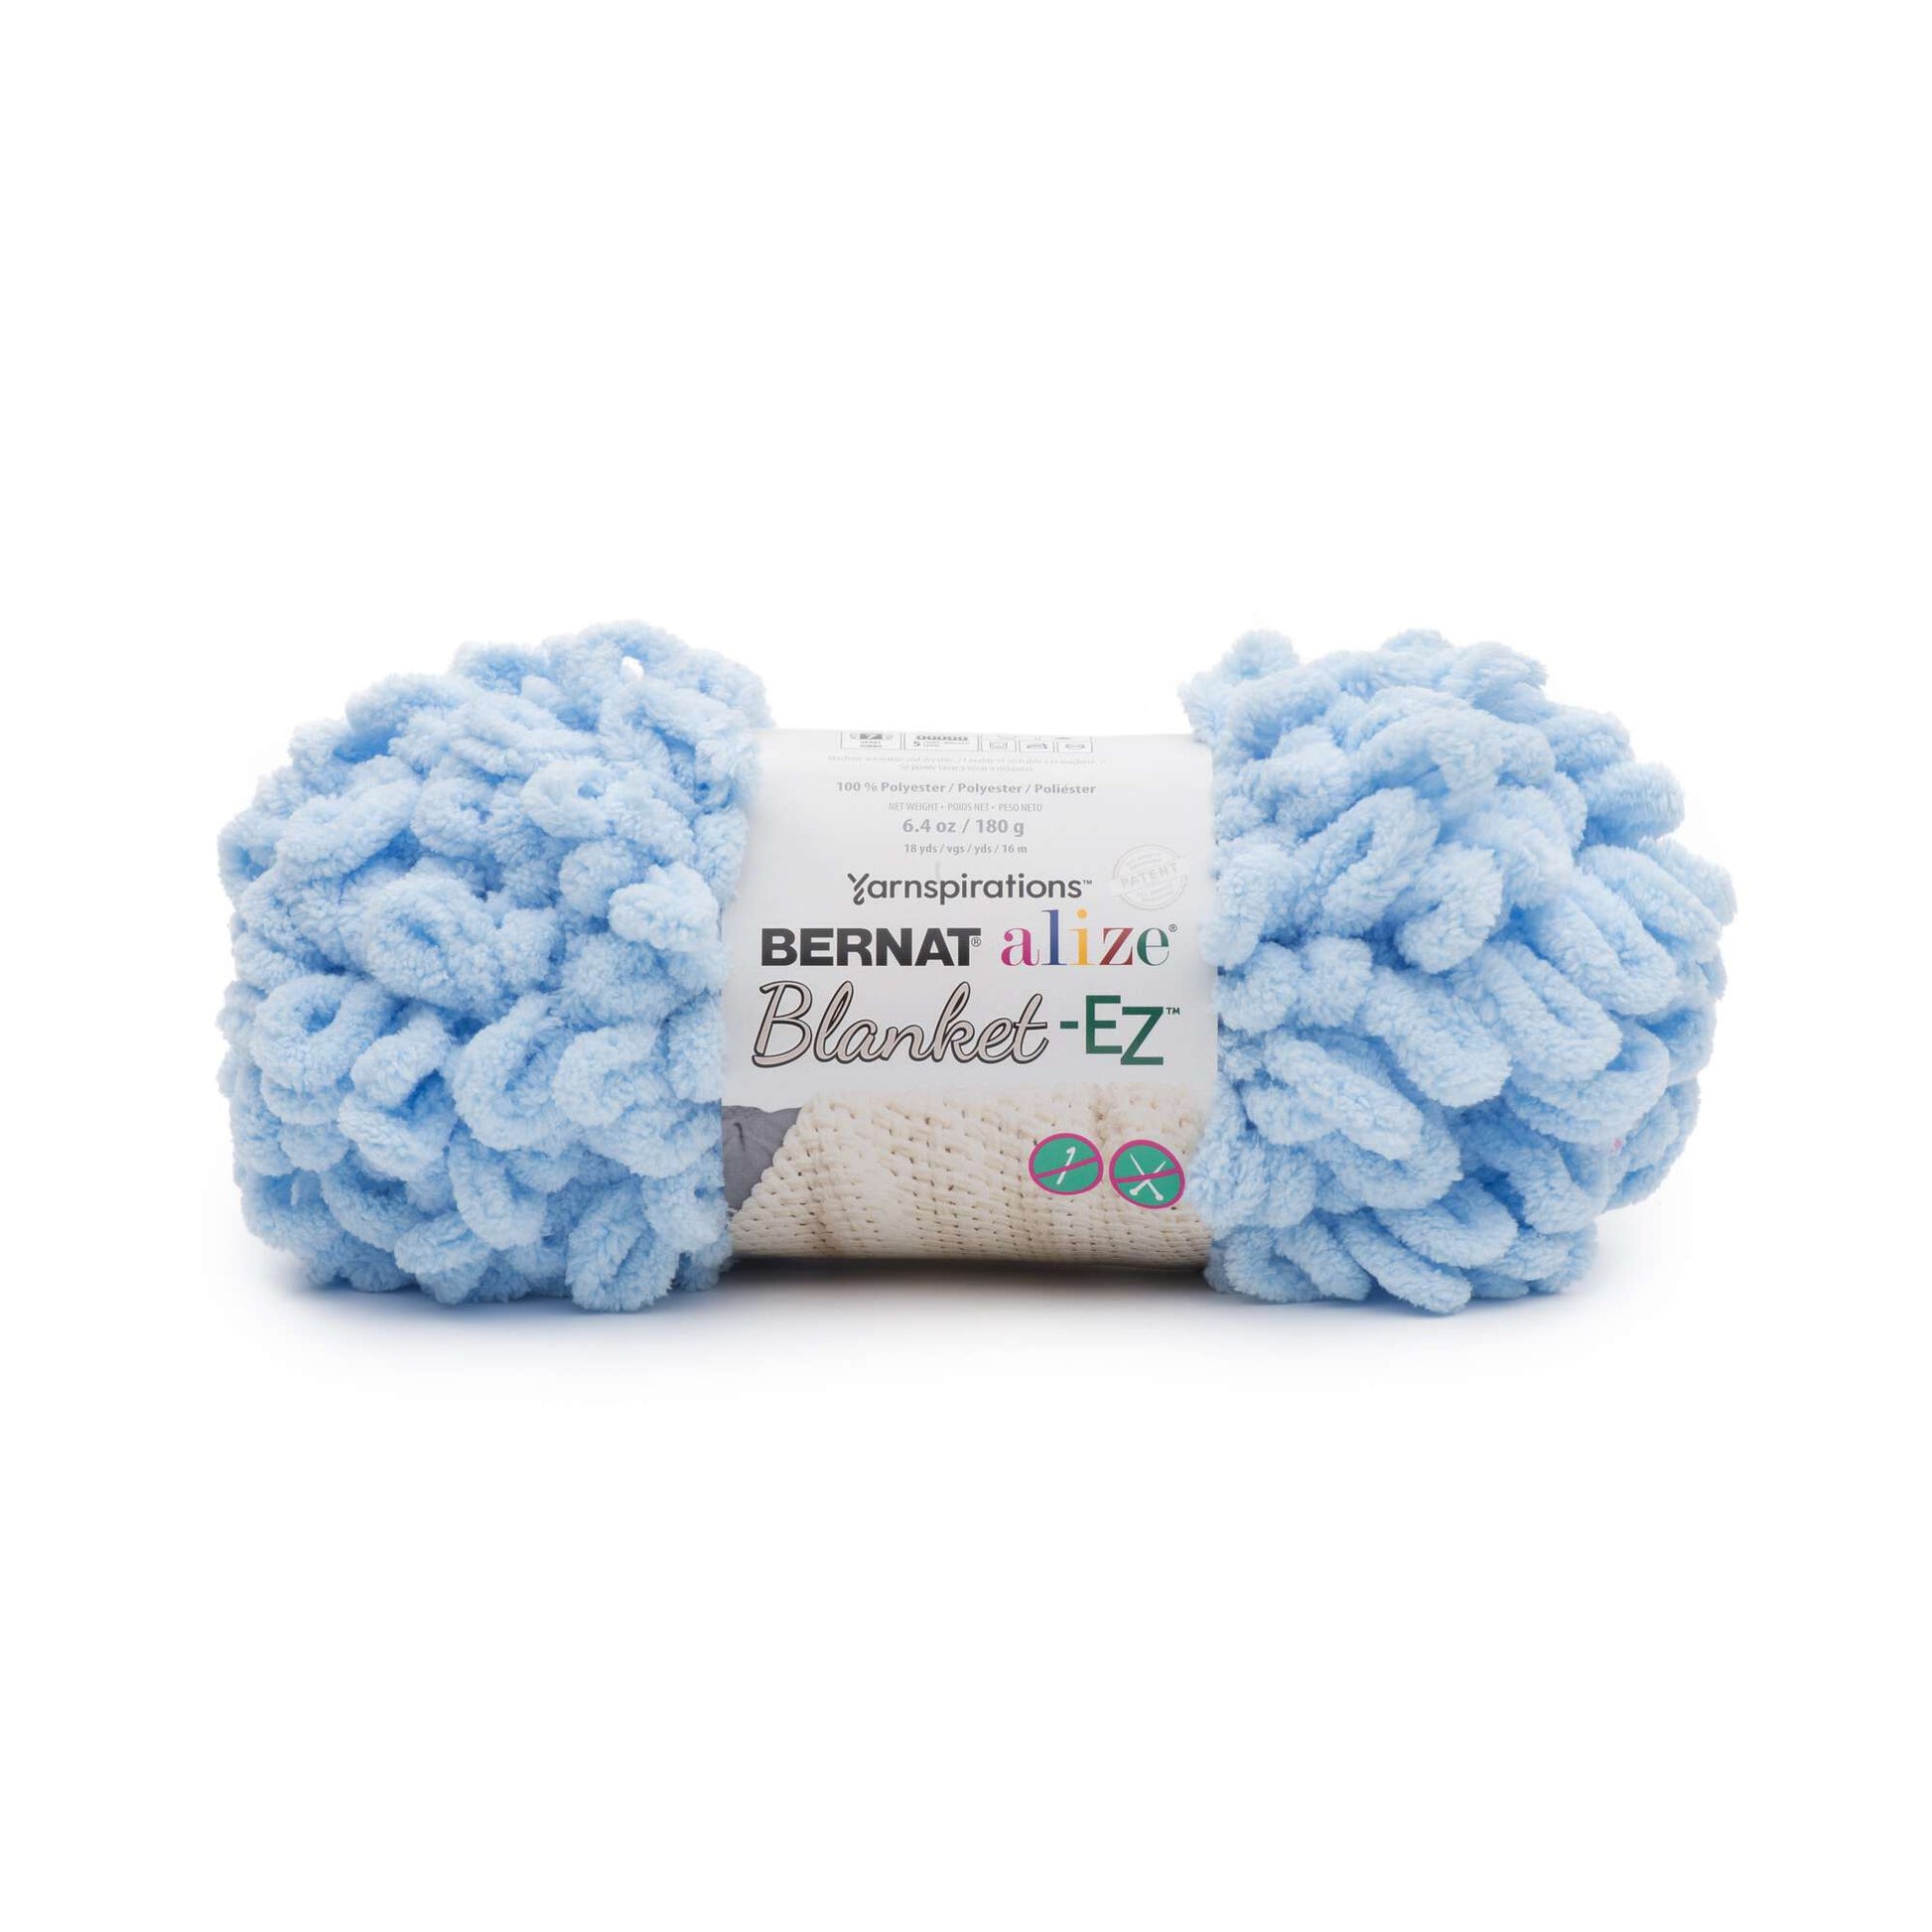 Bernat Alize Blanket-EZ Yarn - Discontinued Shades